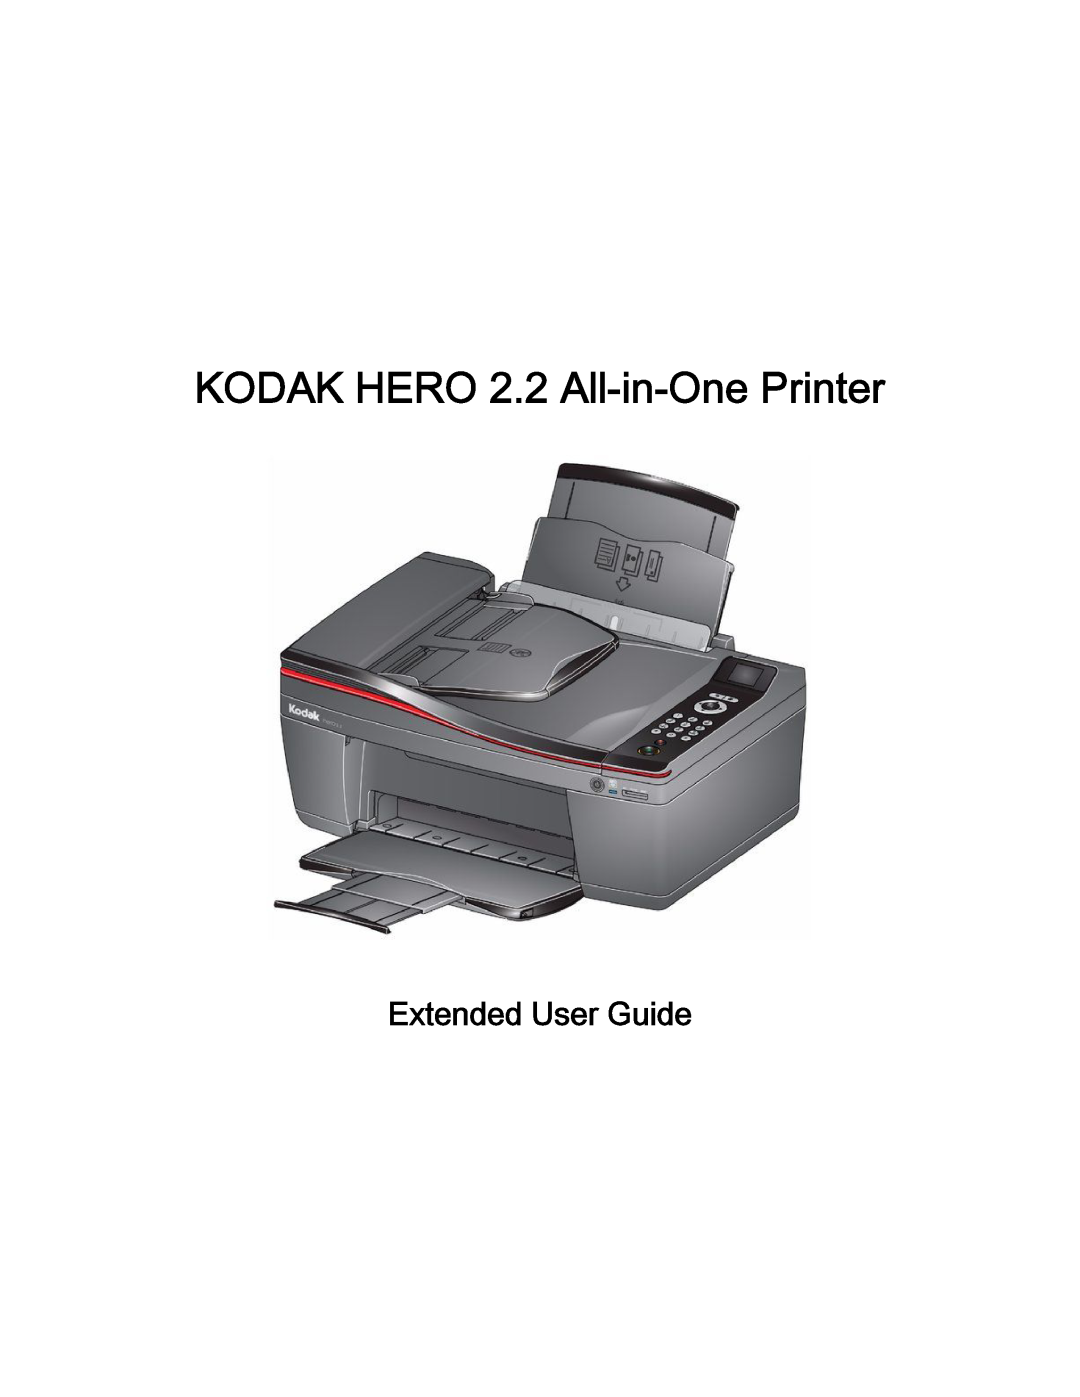 Kodak manual KODAK HERO 2.2 All-in-One Printer, Extended User Guide 